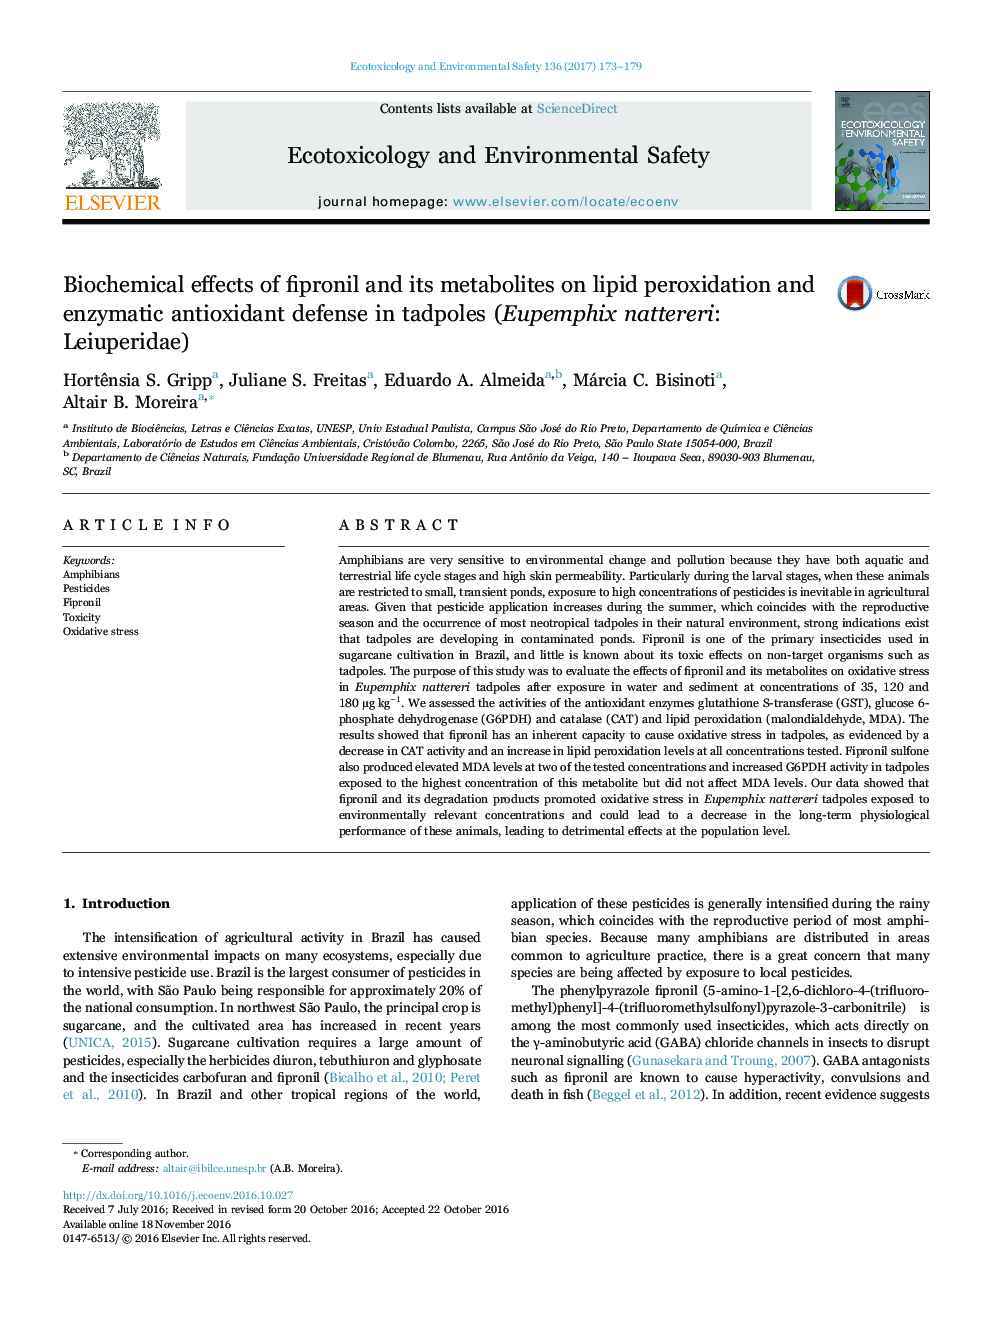 Biochemical effects of fipronil and its metabolites on lipid peroxidation and enzymatic antioxidant defense in tadpoles (Eupemphix nattereri: Leiuperidae)